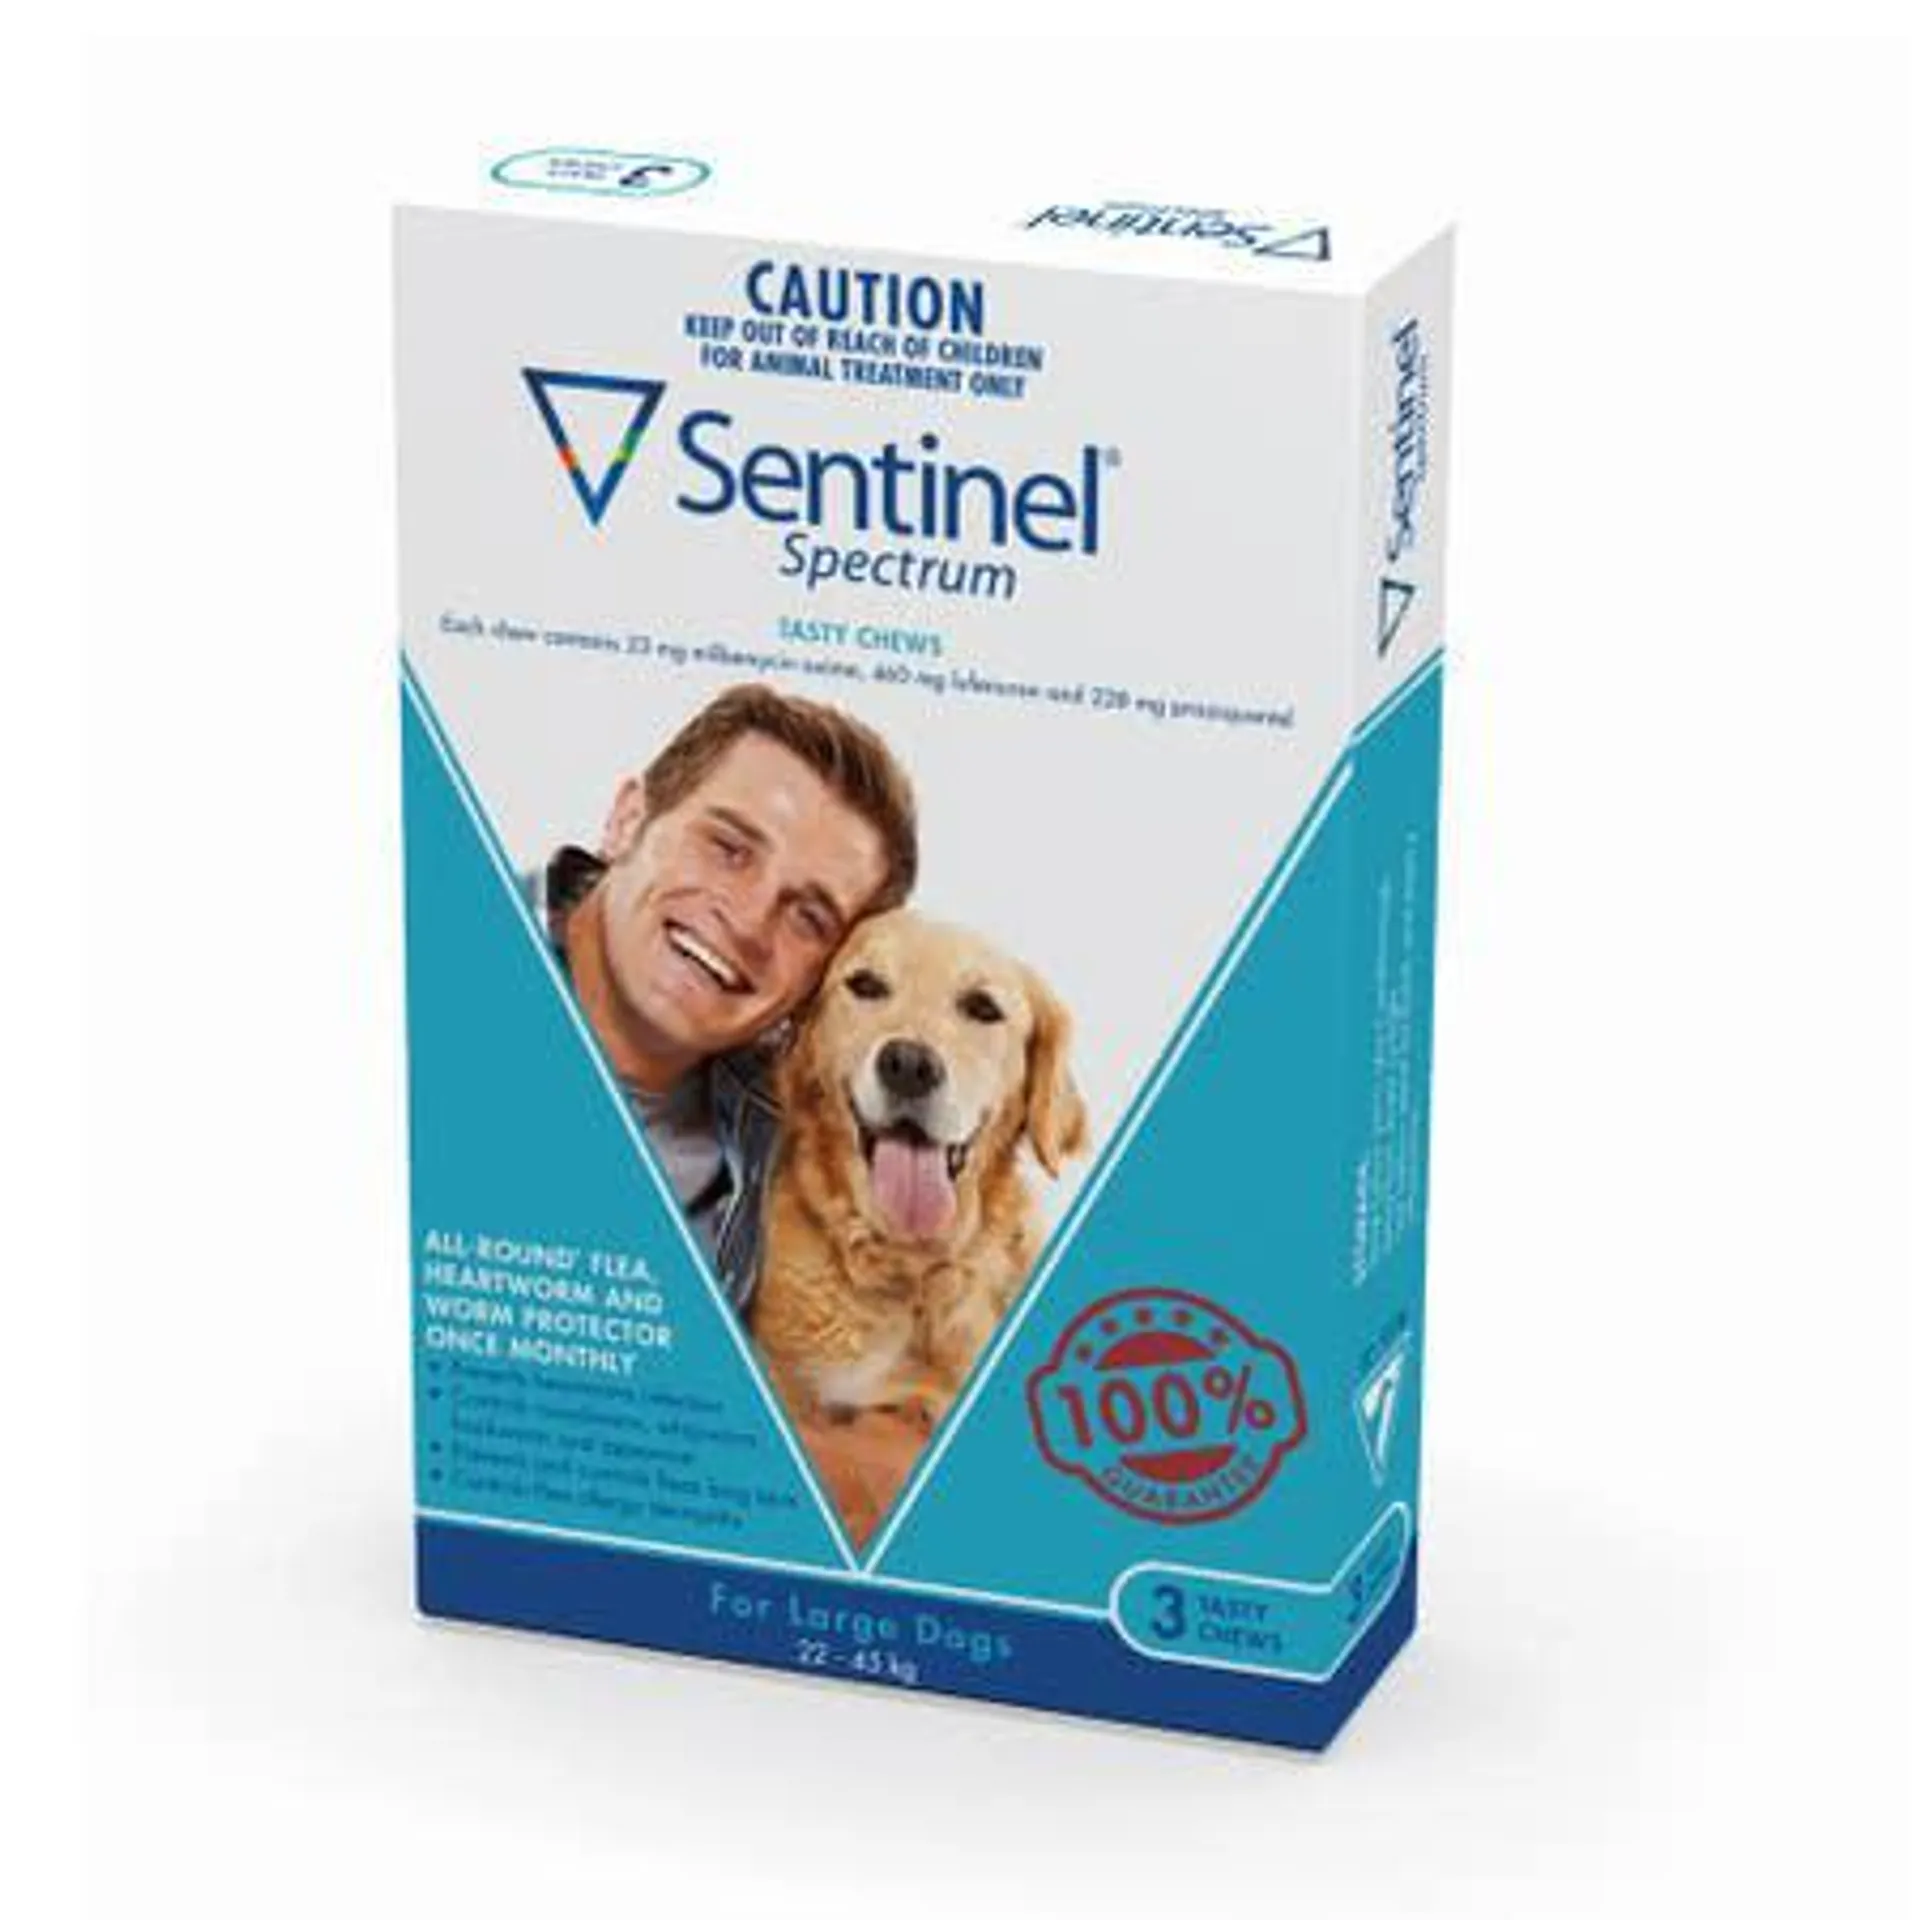 Sentinel Spectrum For Large Dogs 22-45kg